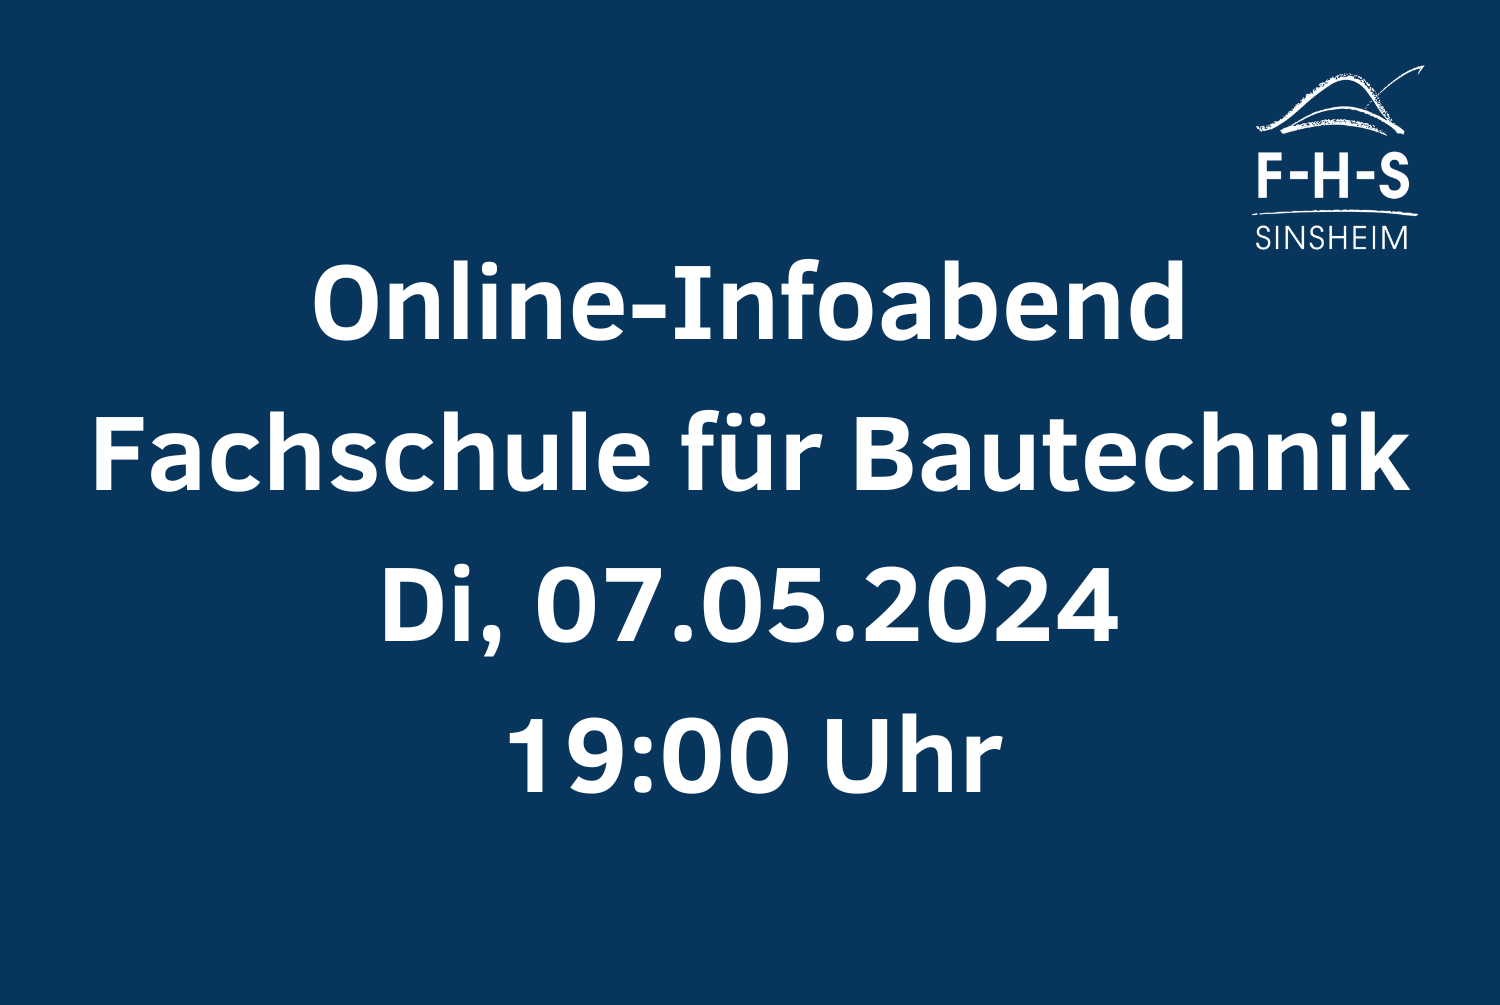 Online-Infoabend Fachschule für Bautechnik am Di, 07.05.2024